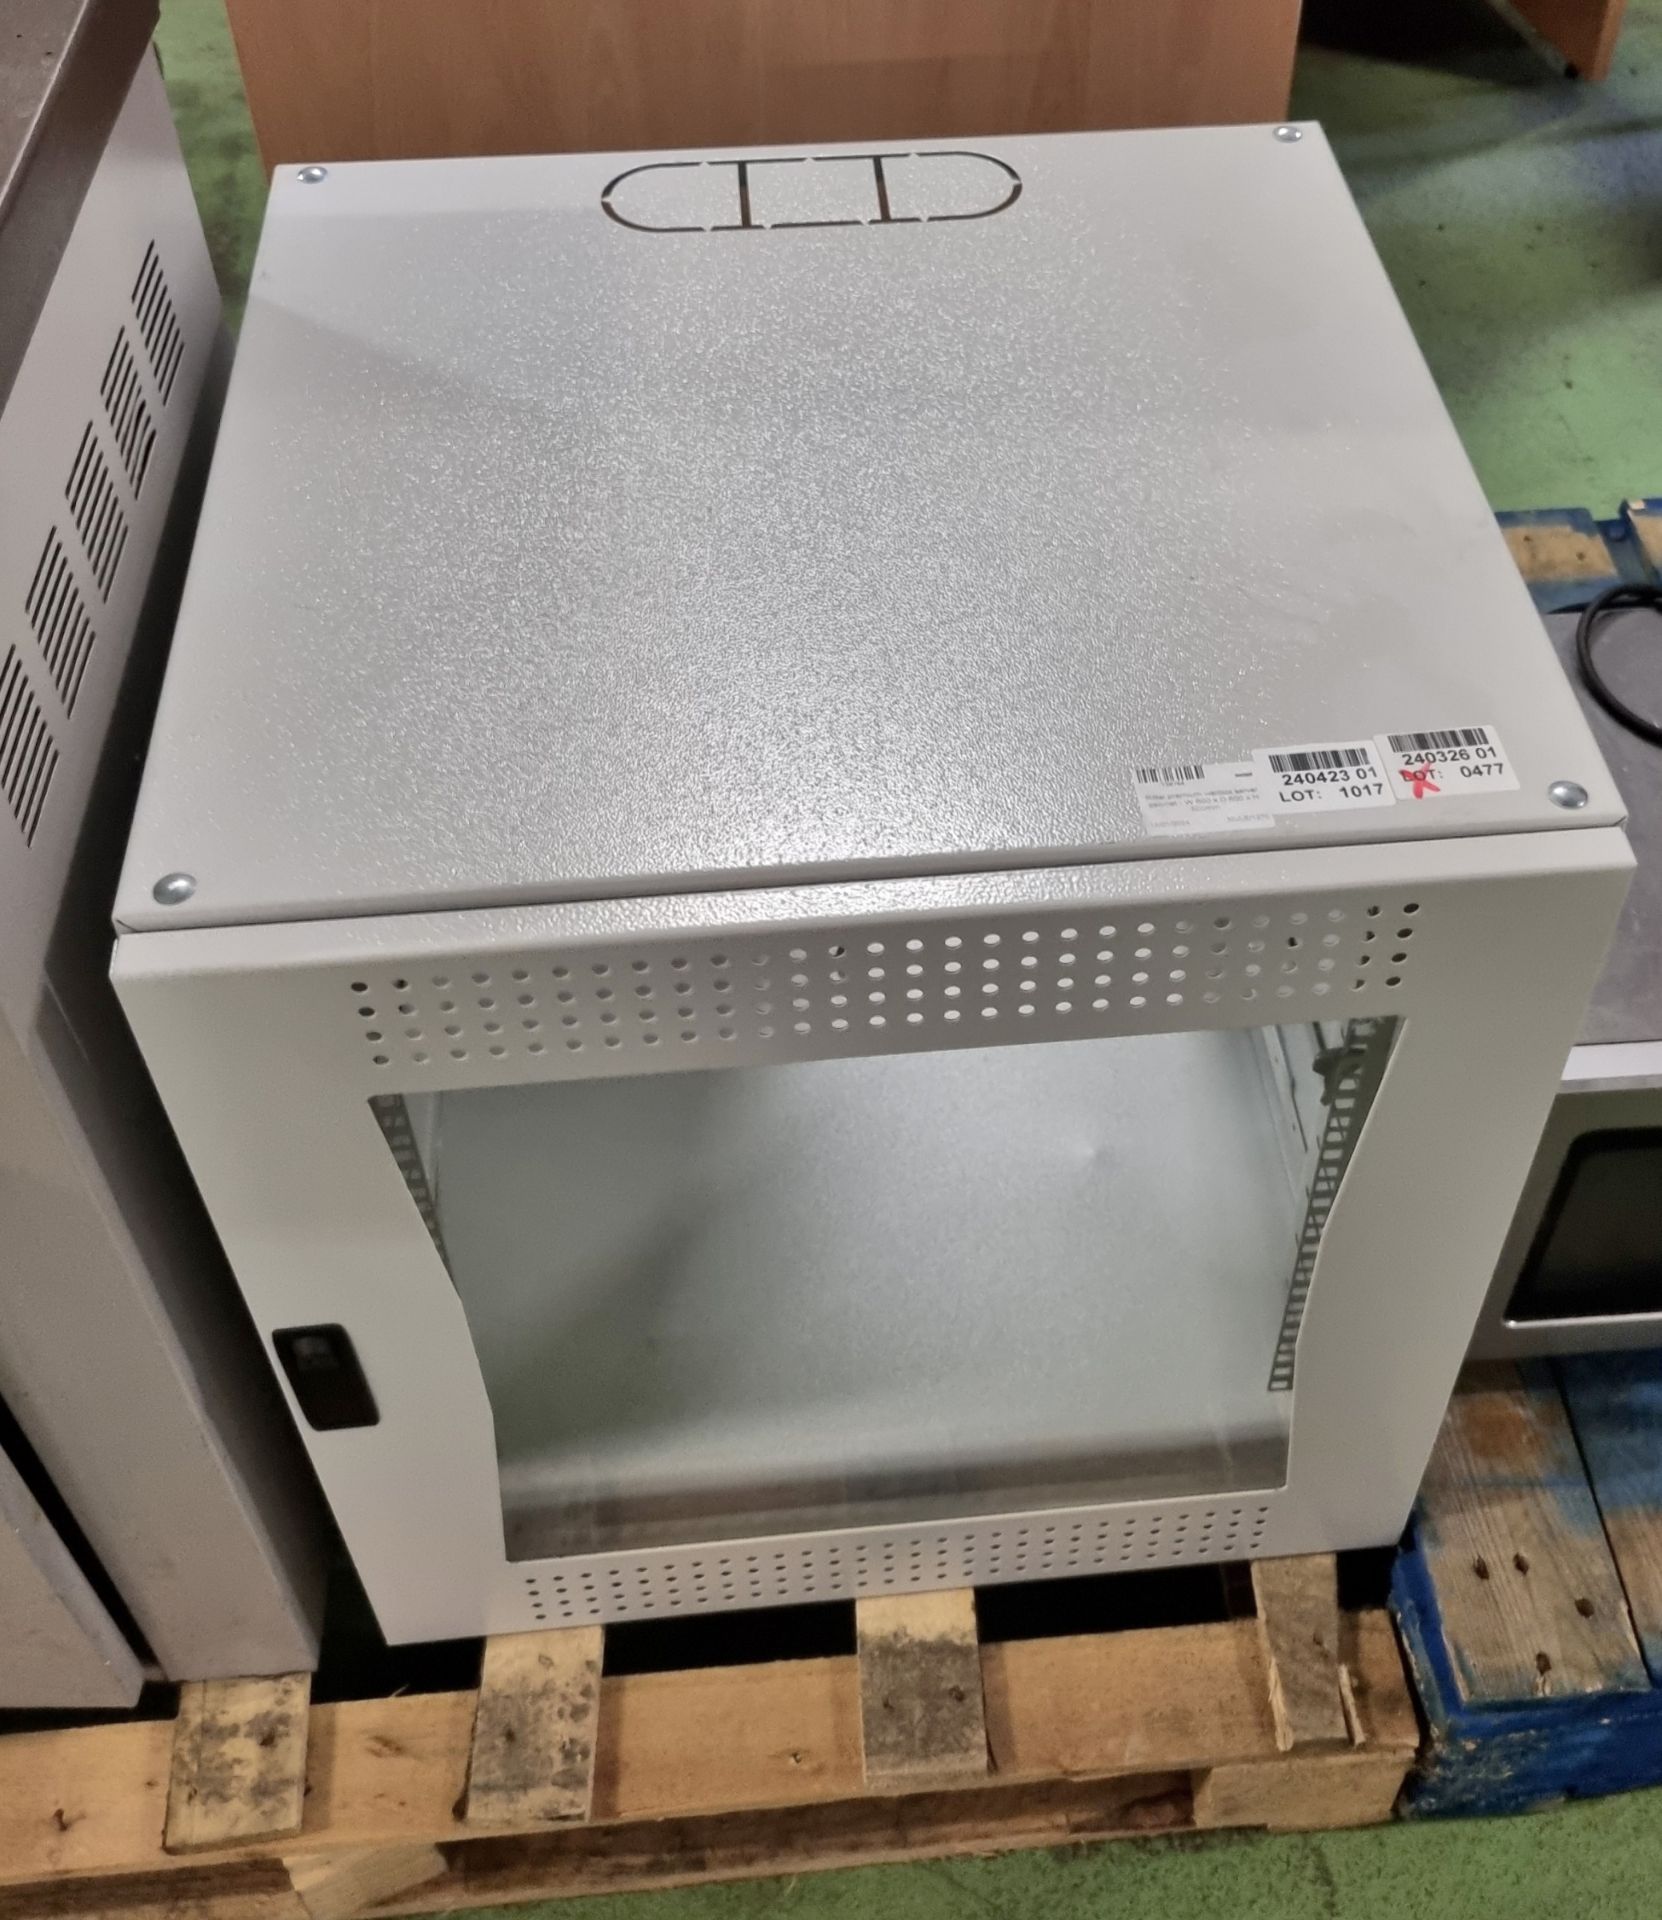 Rittal premium wallbox server cabinet - W 600 x D 600 x H 600mm - Image 2 of 4